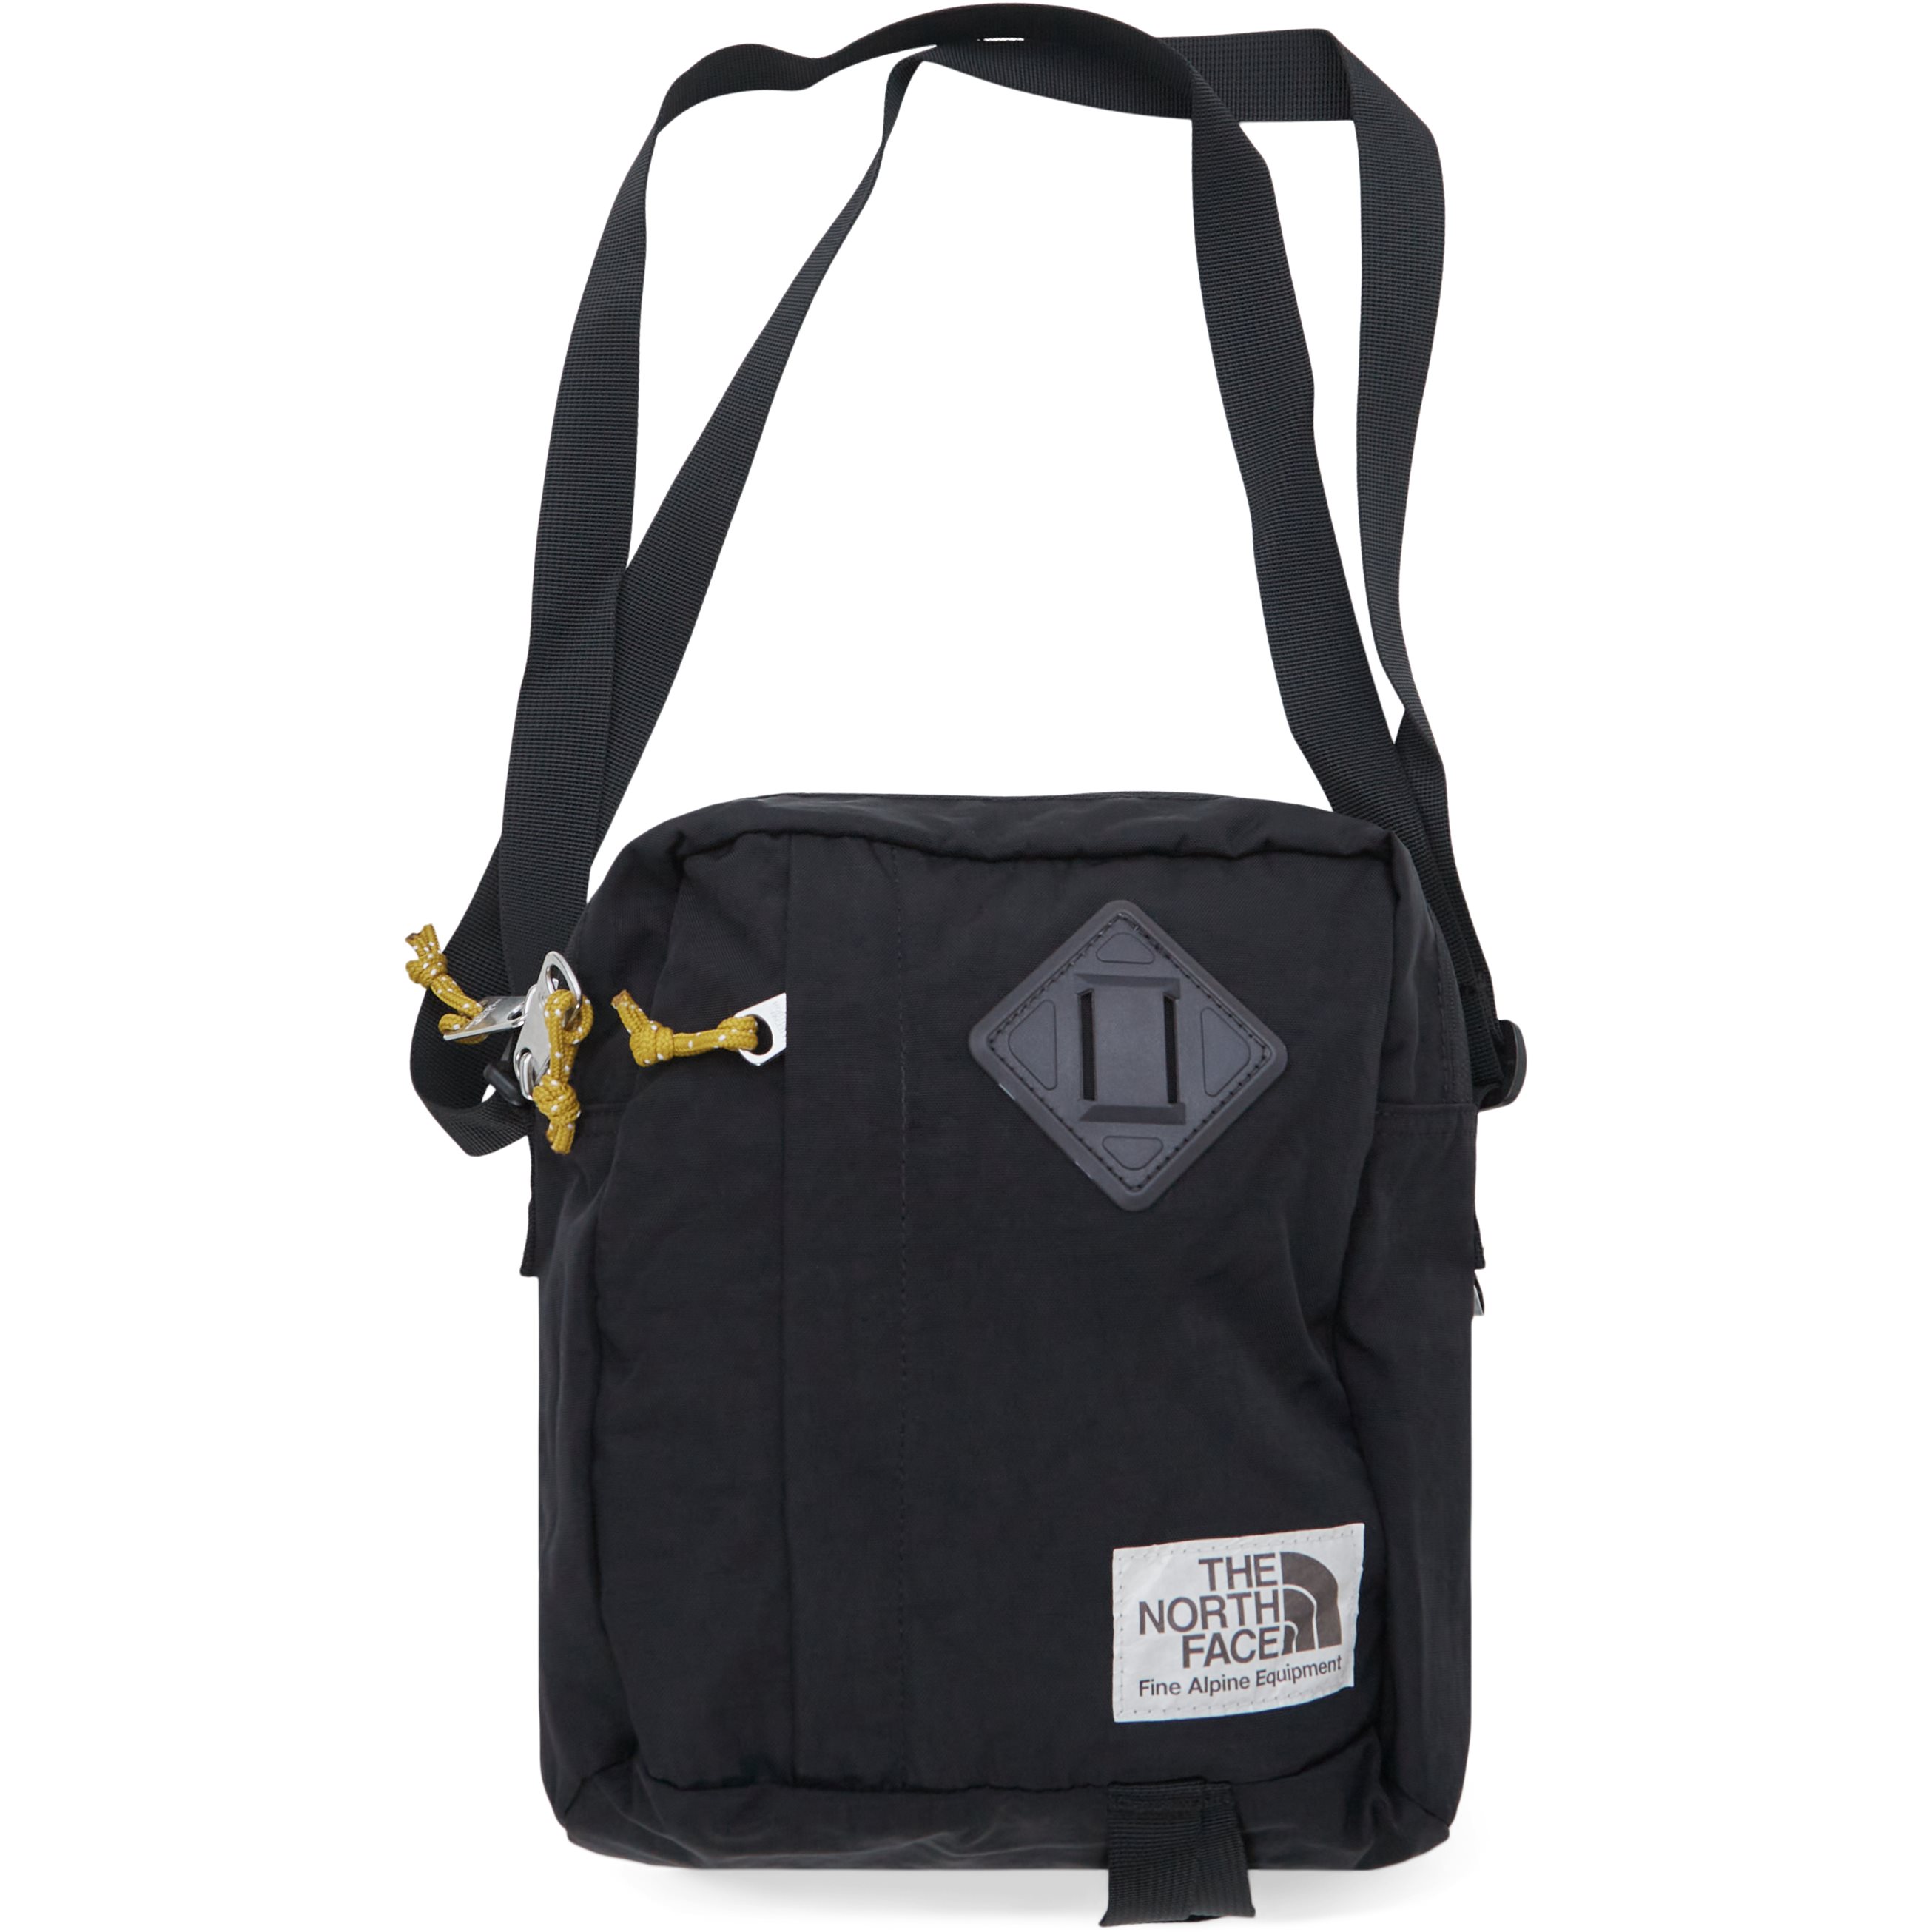 The North Face Bags BERKELEY CROSSBODY 0A52VT Black